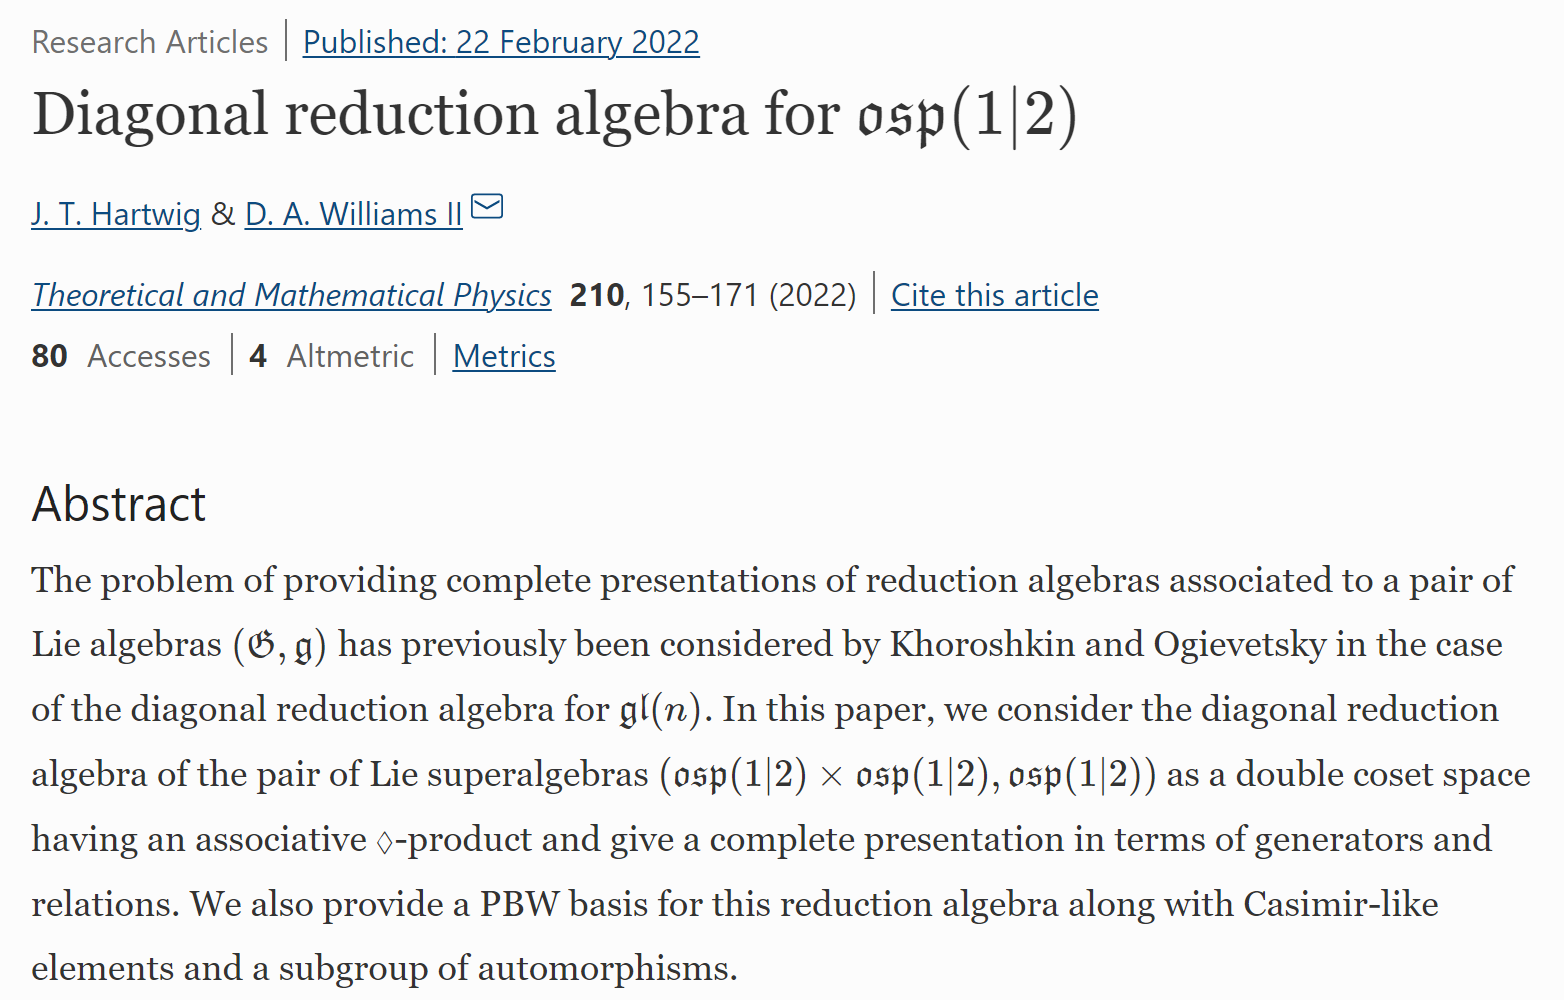 Paper 1: Diagonal reduction algebra for osp(1|2)